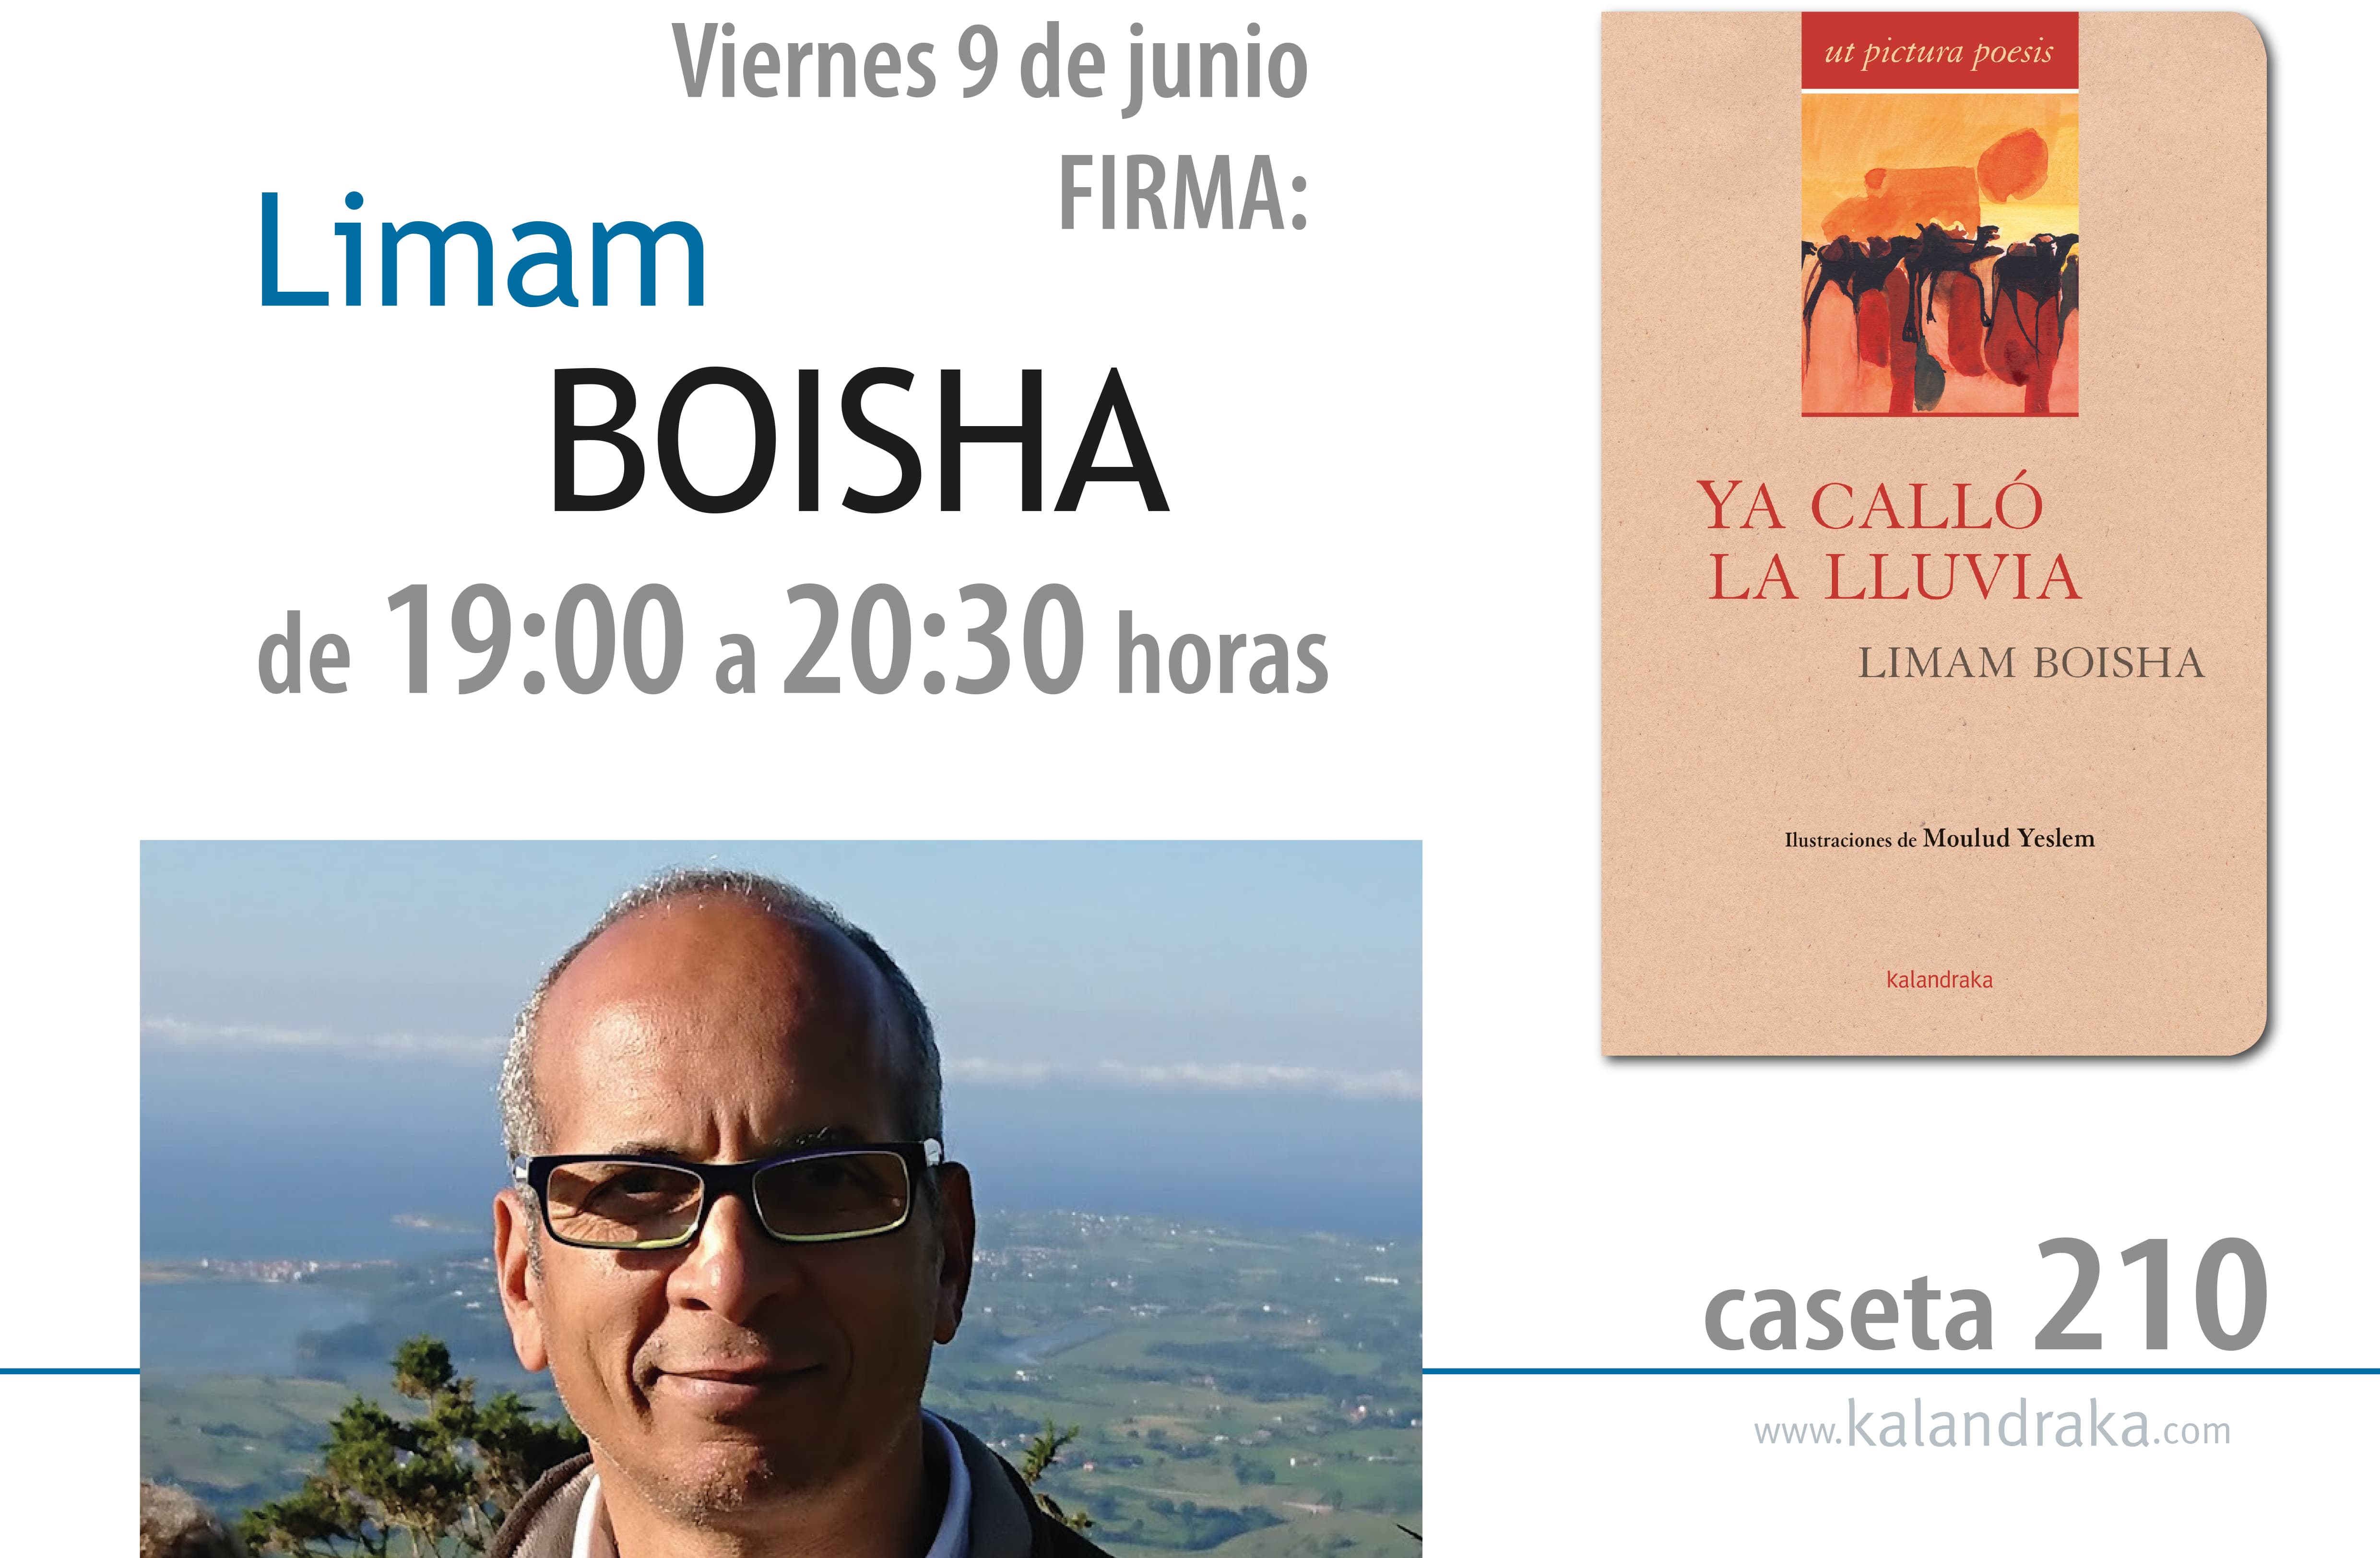 FERIA DEL LIBRO DE MADRID: FIRMA DE LIMAM BOISHA